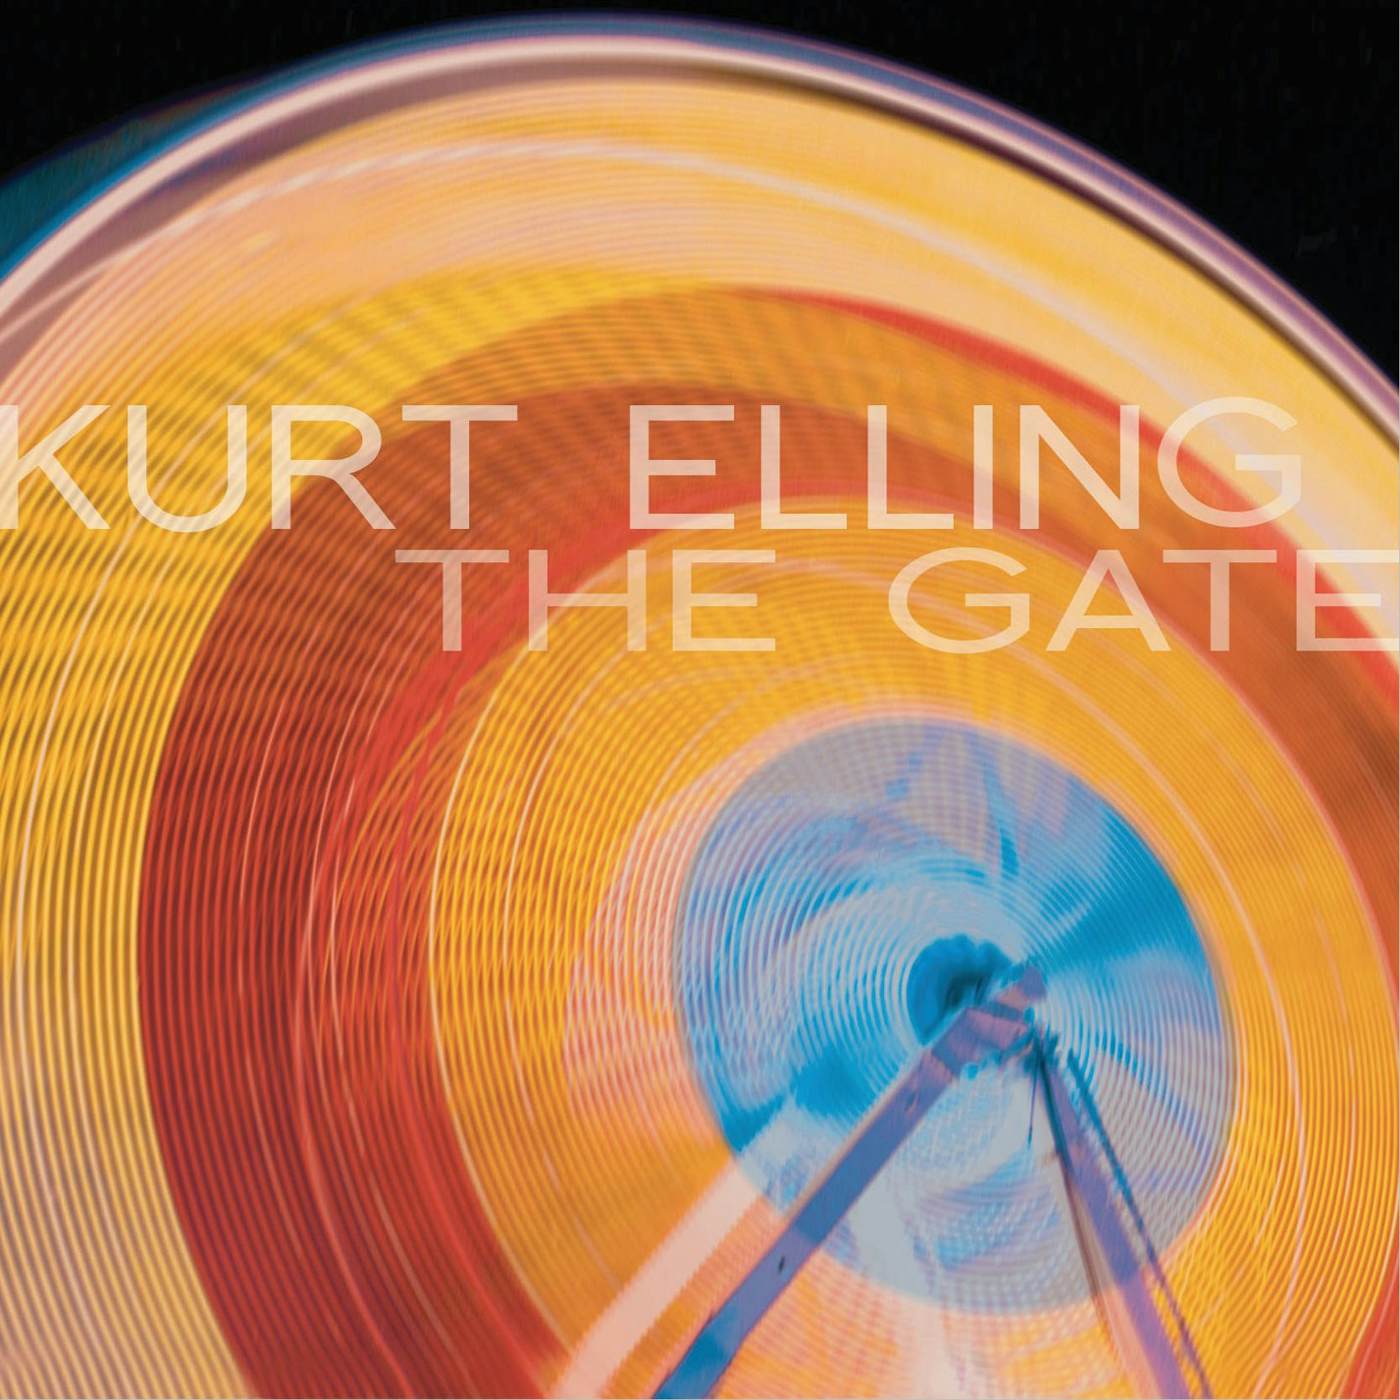 Kurt Elling GATE CD